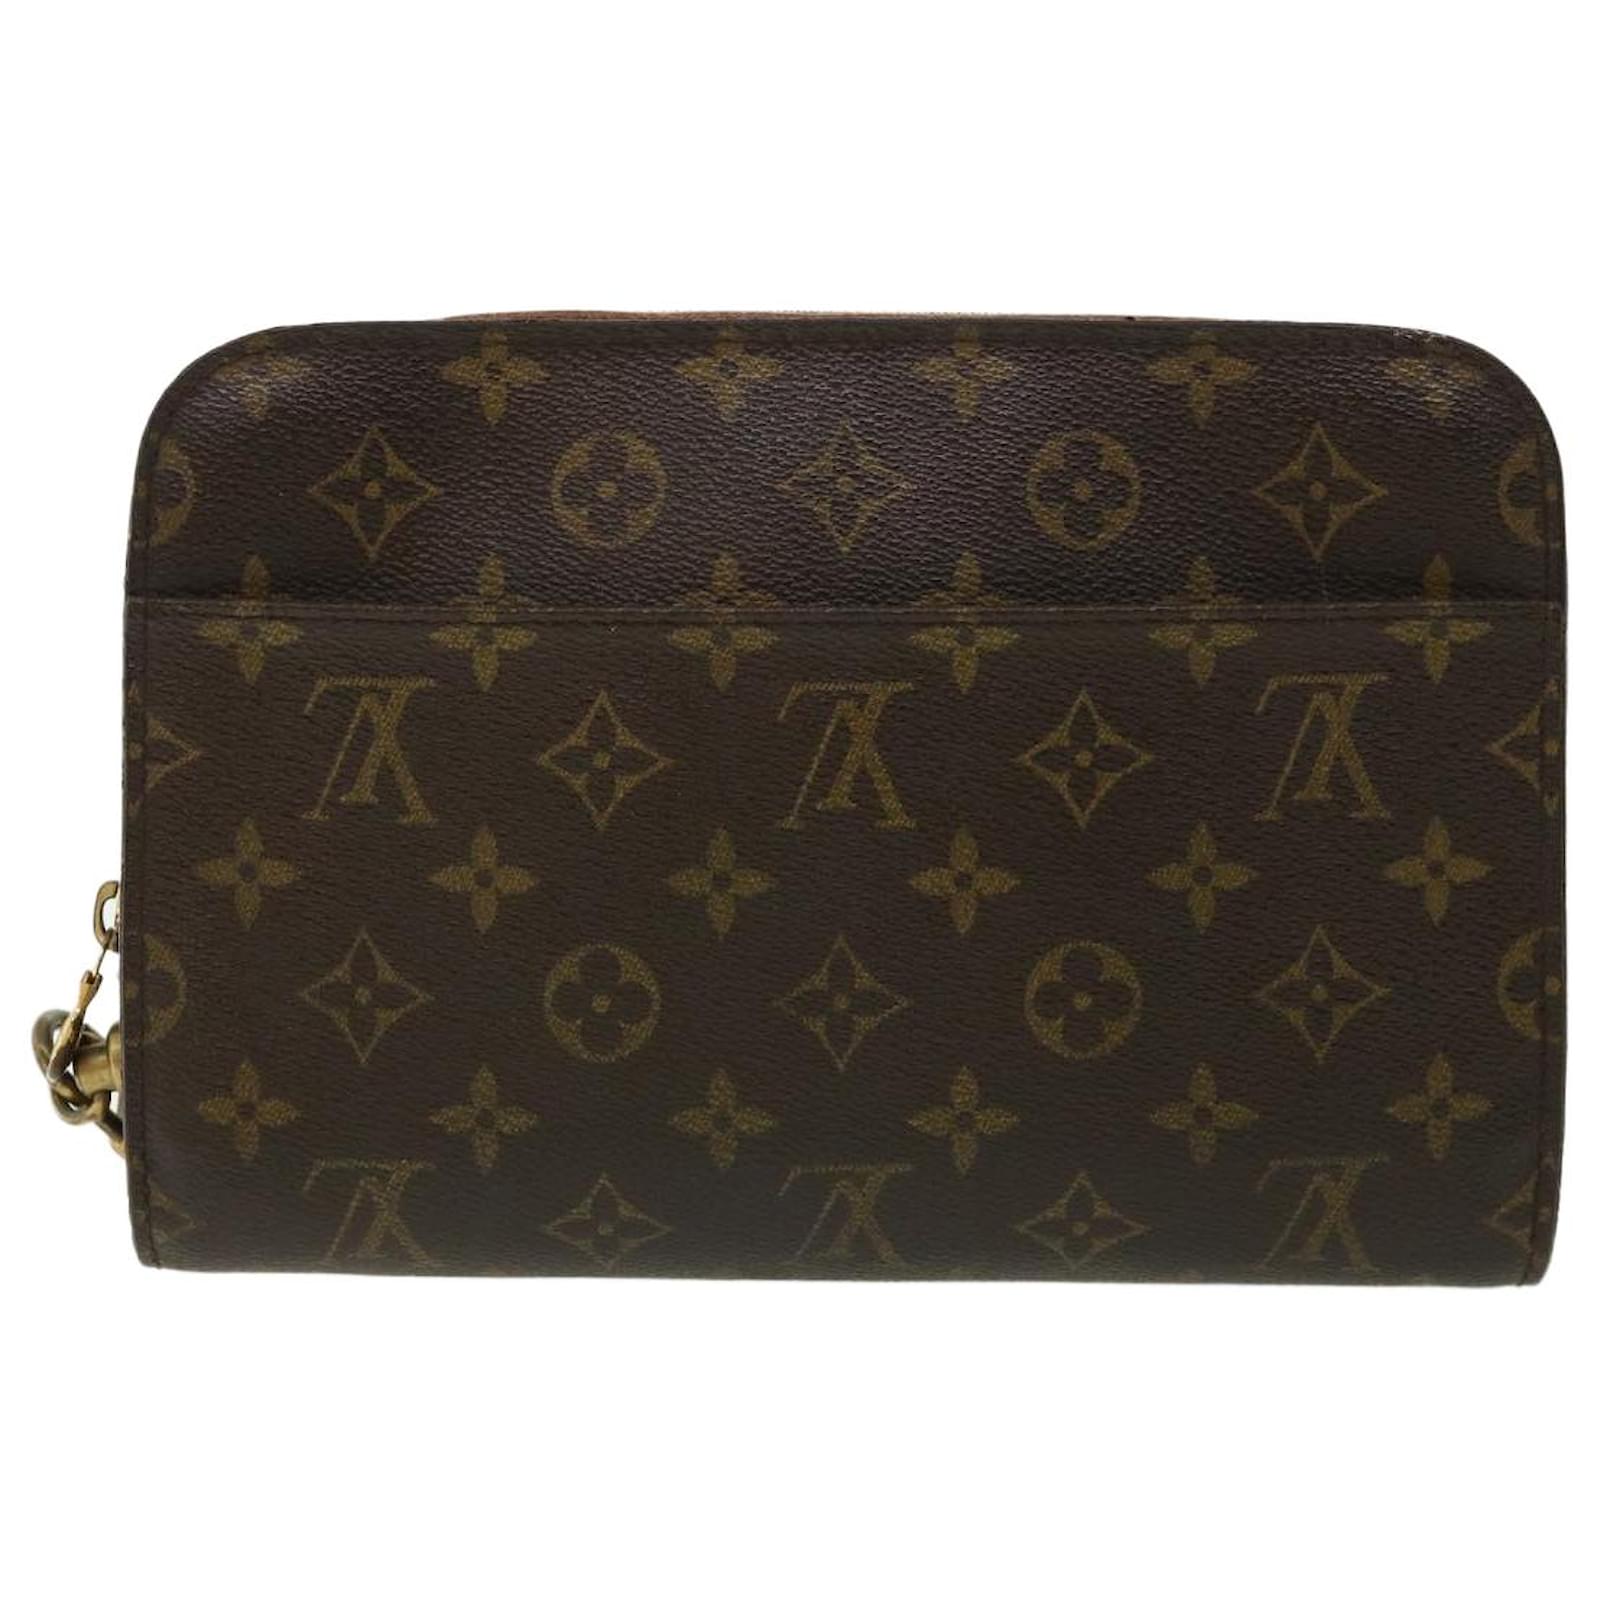 Louis Vuitton M51790 Orsay Clutch Bag USED LV Monogram w/box